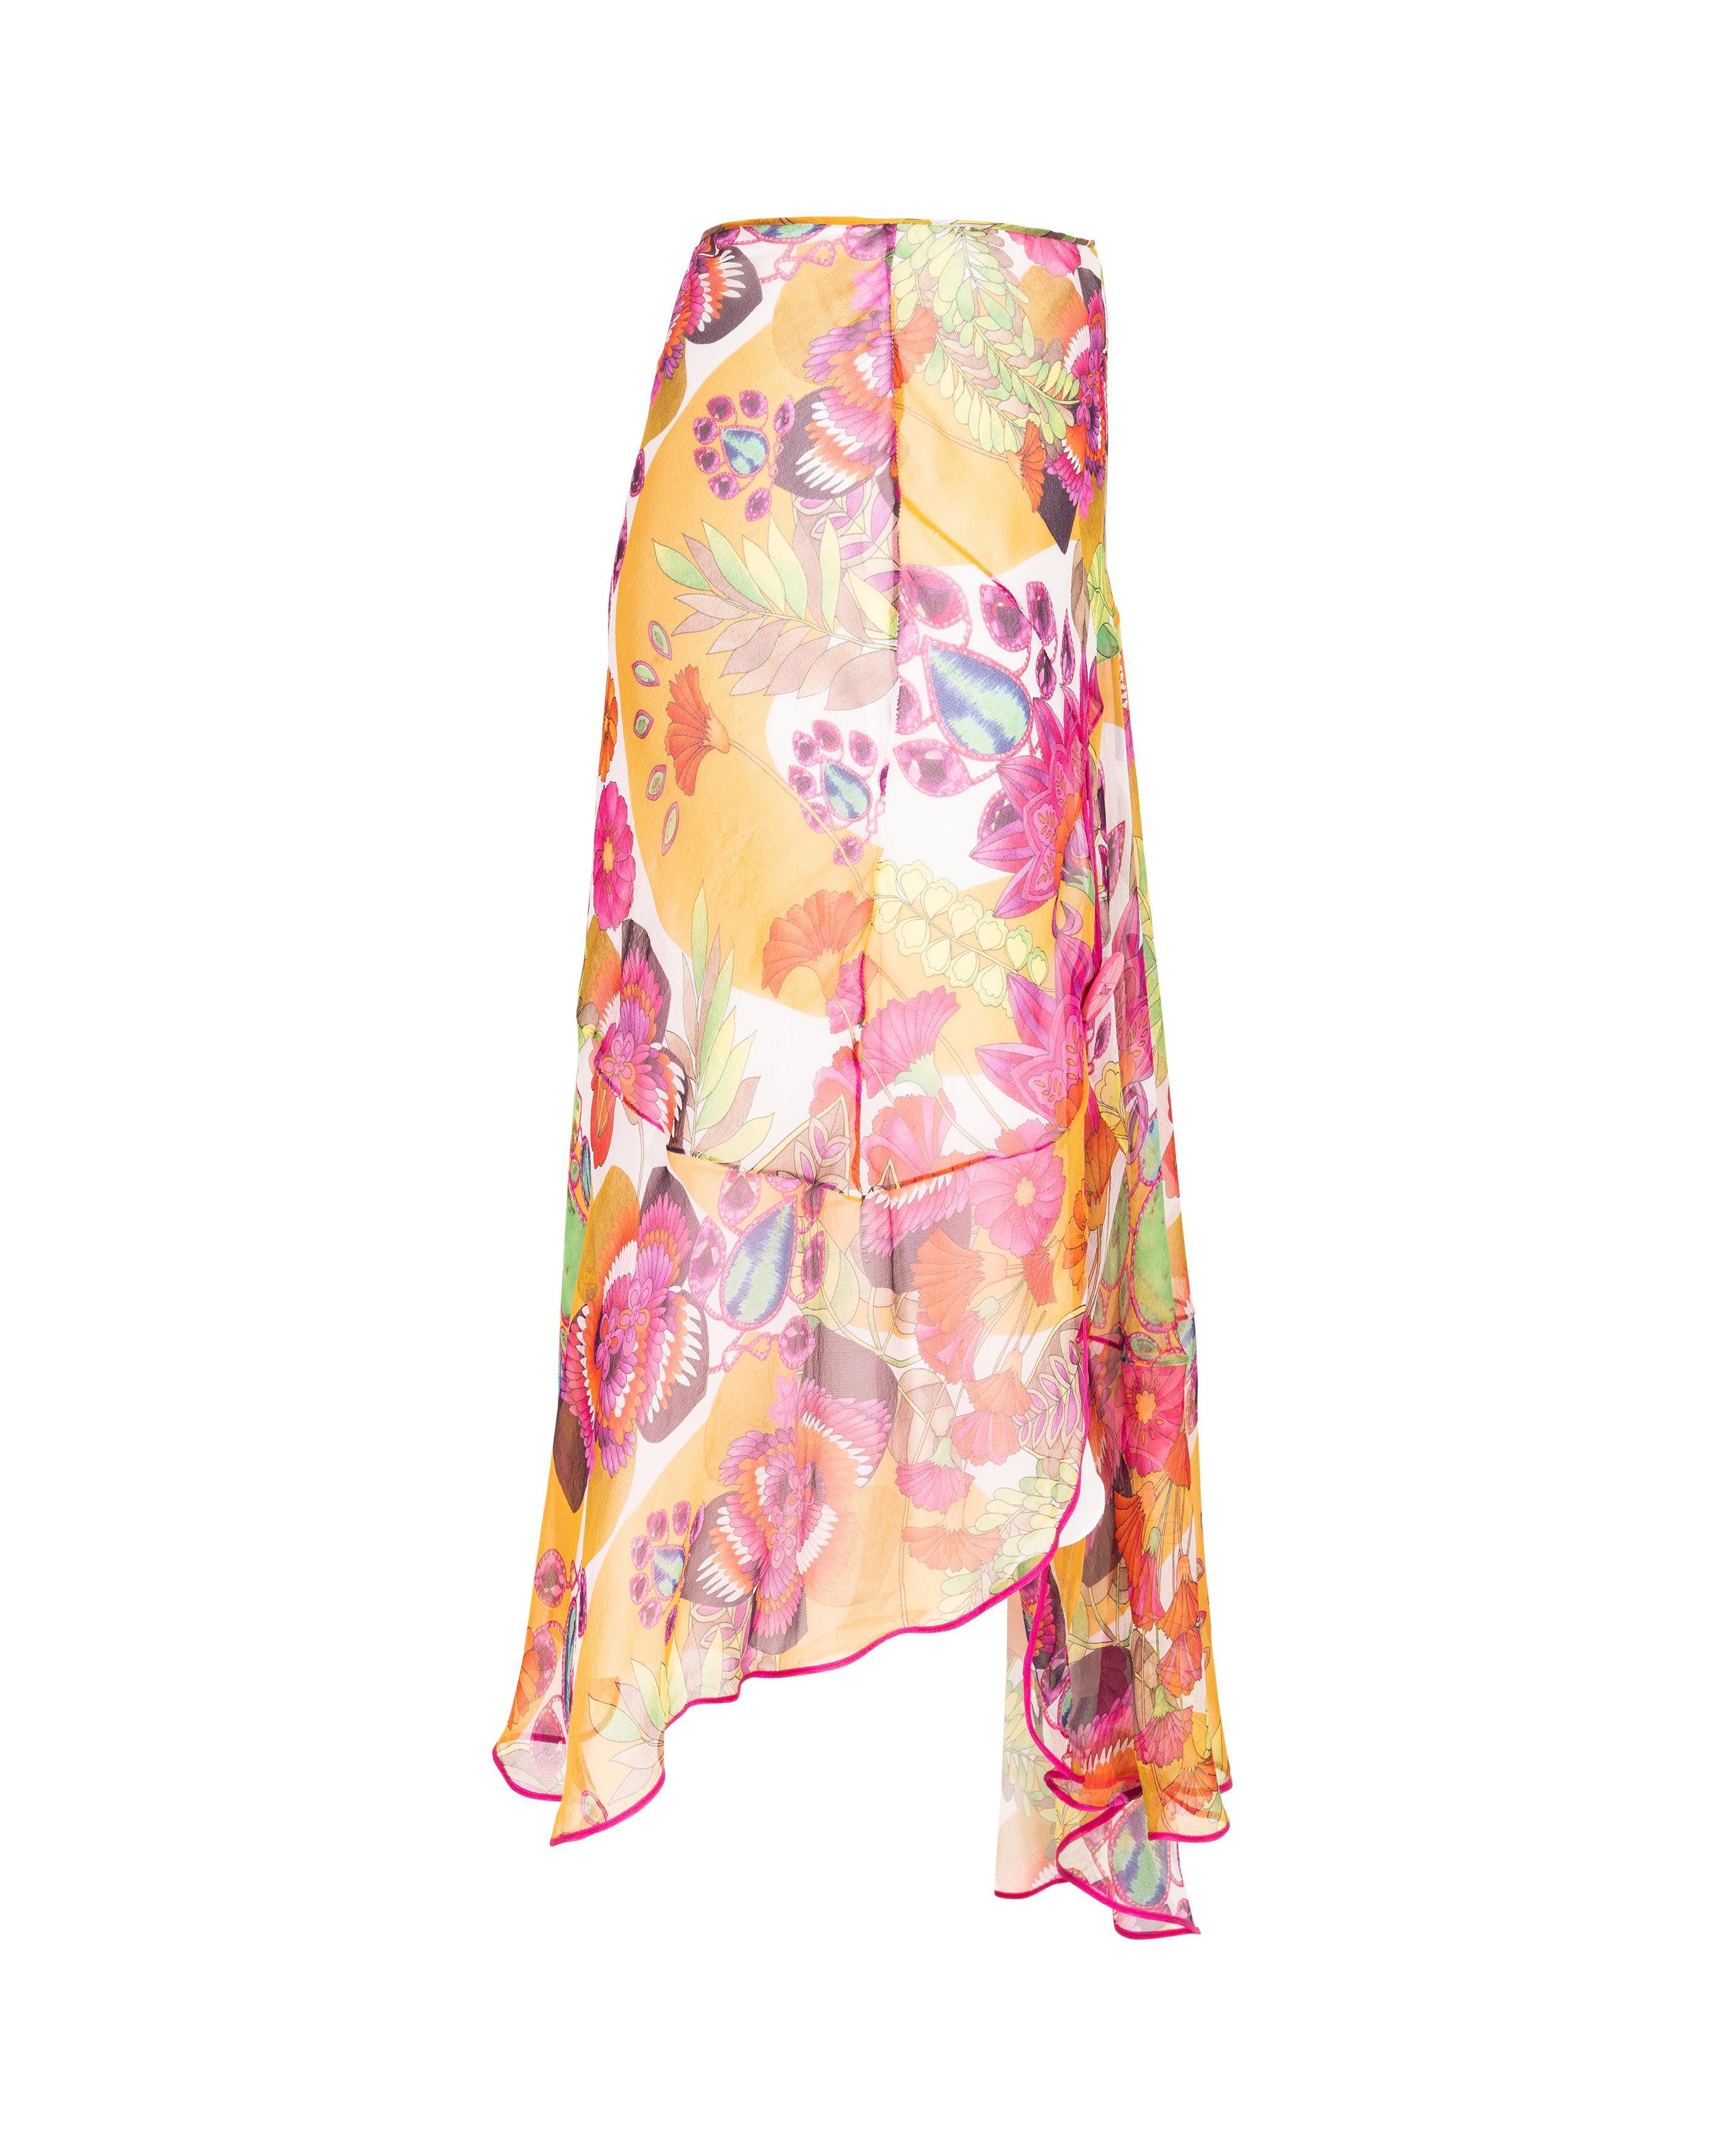 Women's S/S 2005 Christian Dior by John Galliano Floral Print Asymmetrical Silk Skirt